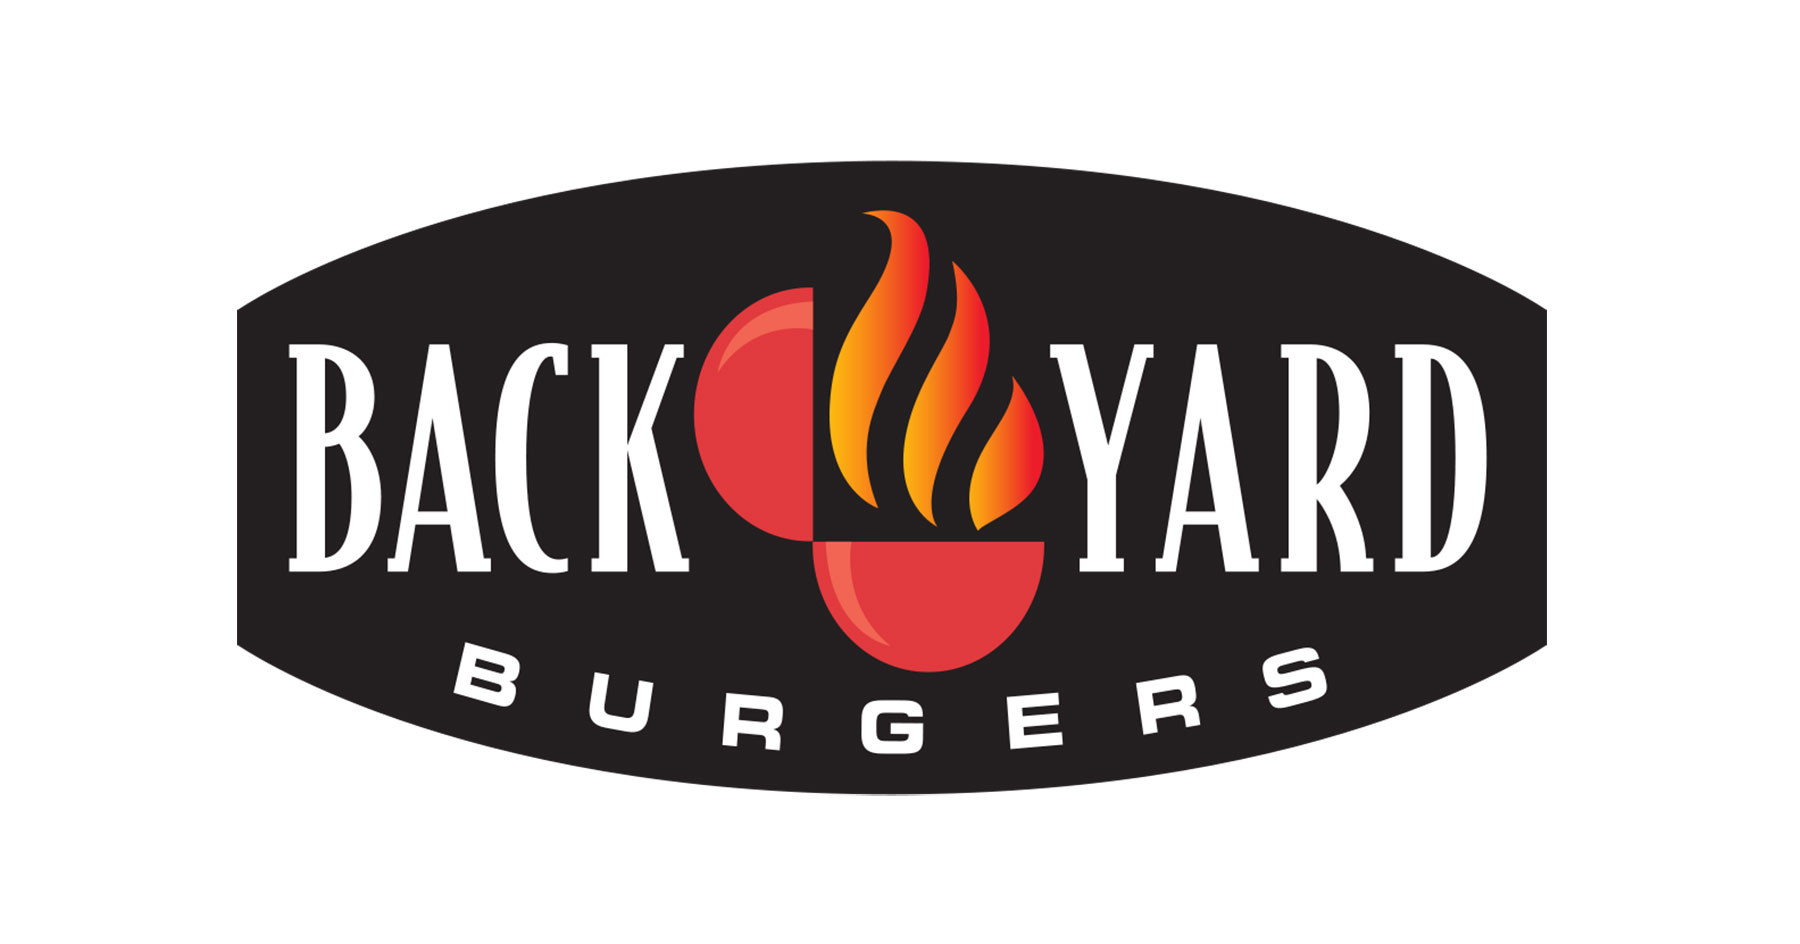 Backyard Burgers Nashville
 Scott Shotter named Back Yard Burgers CEO